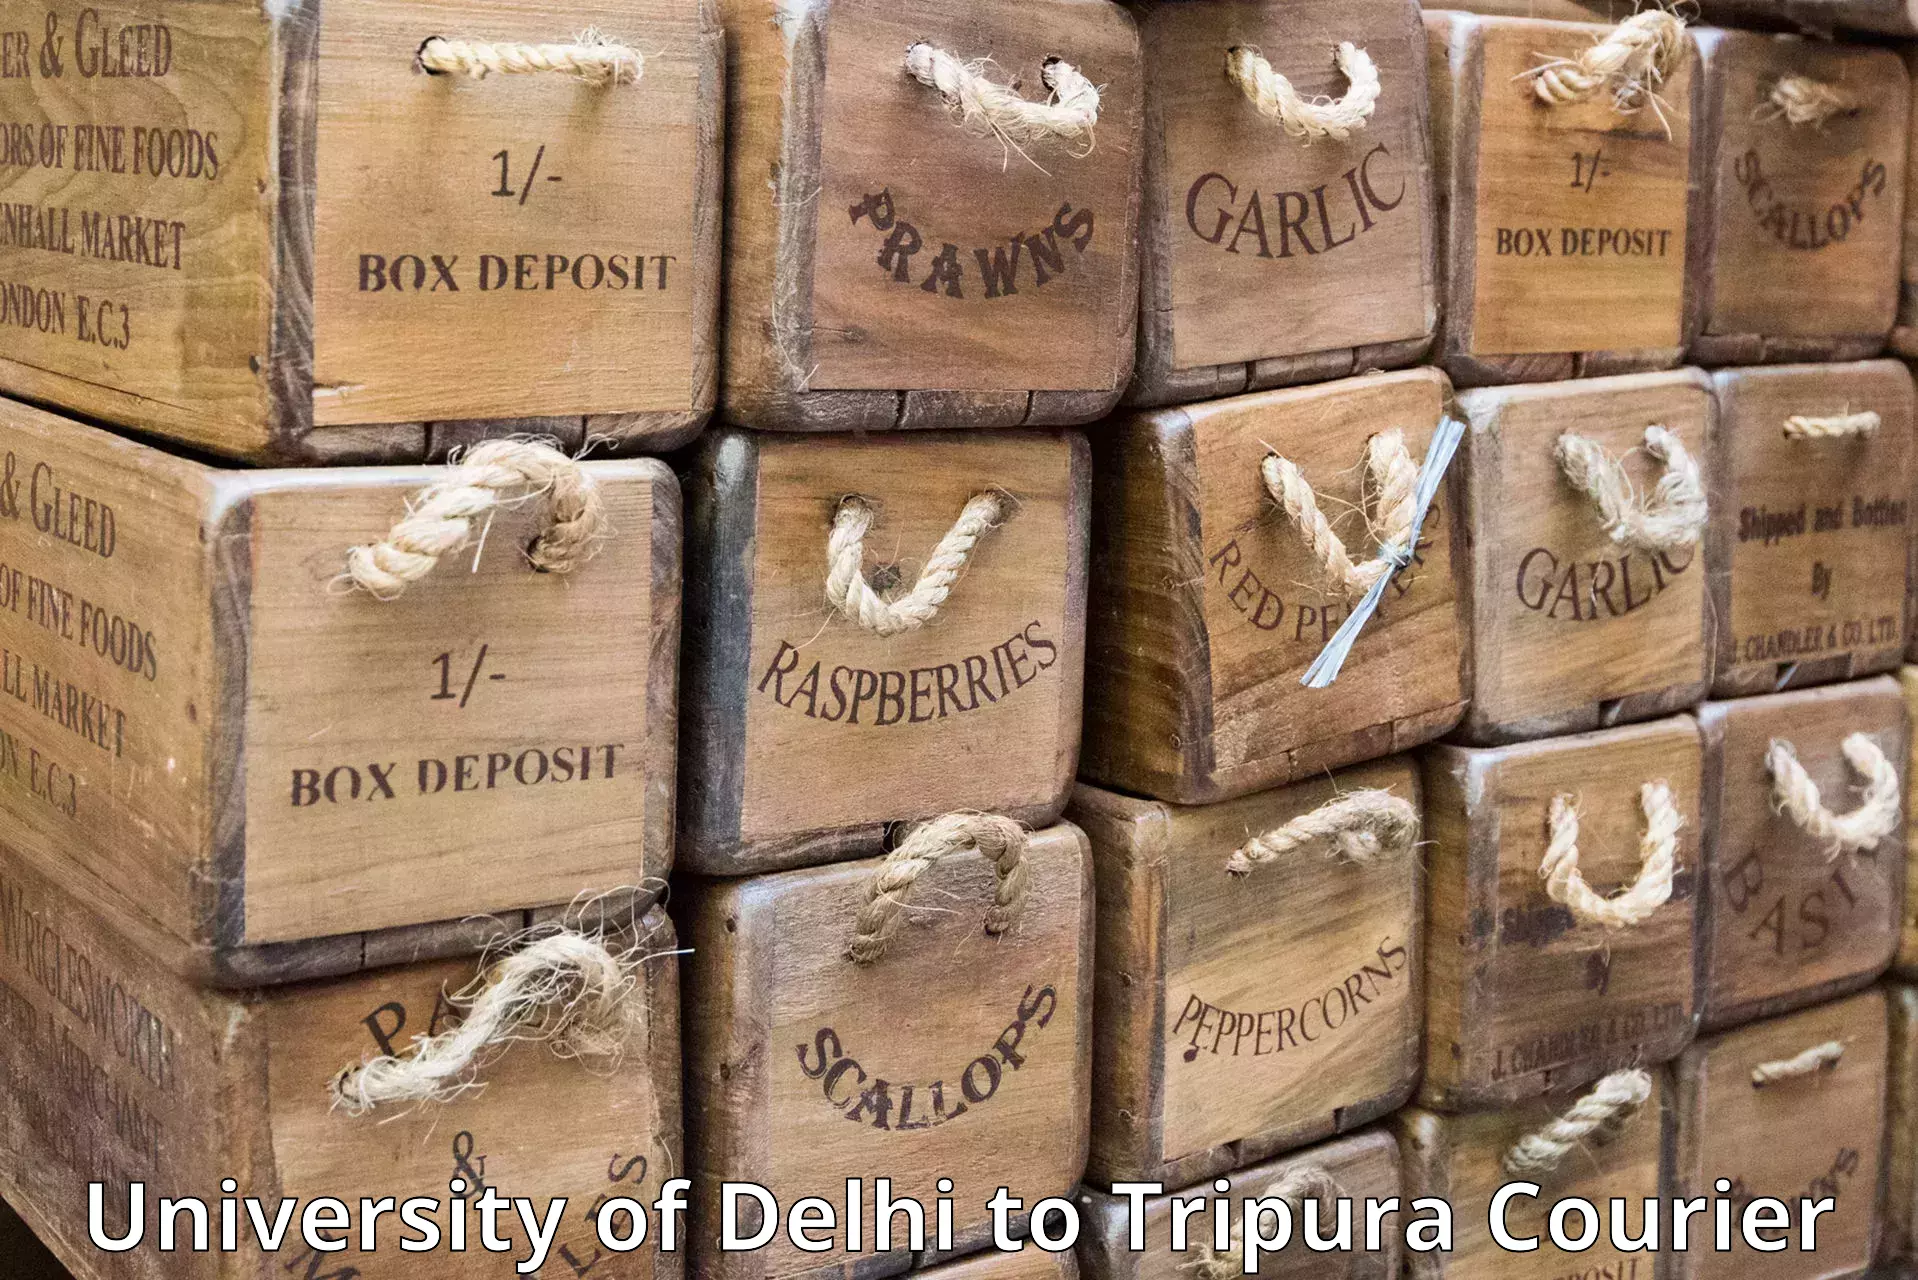 Courier service partnerships University of Delhi to Udaipur Tripura